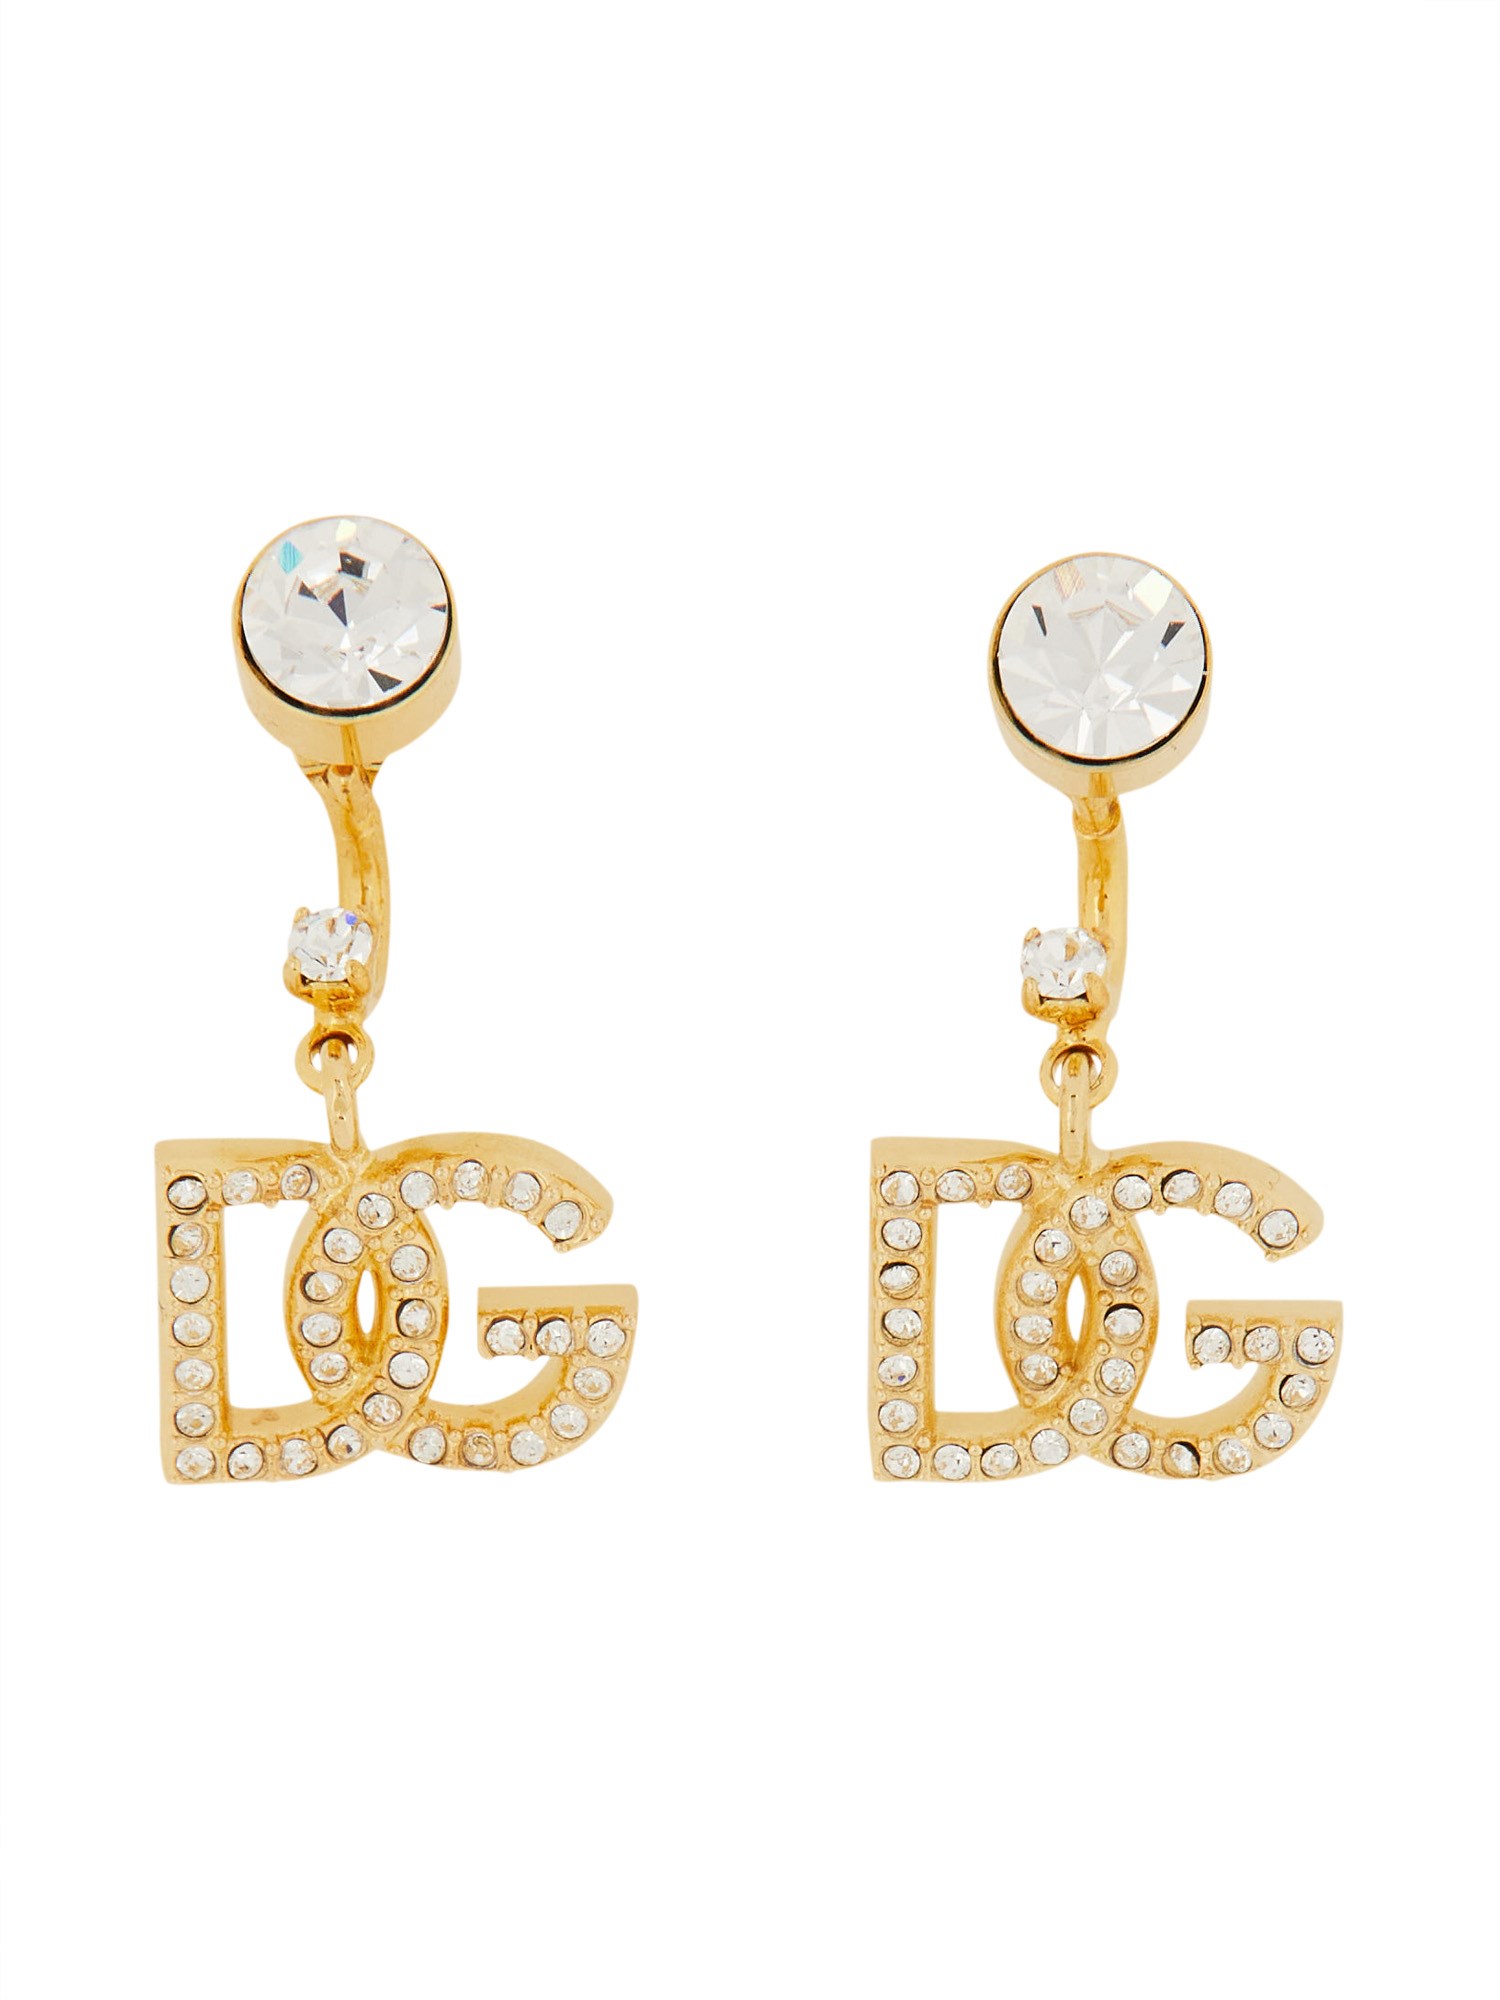 dolce & gabbana dg logo earrings with rhinestones